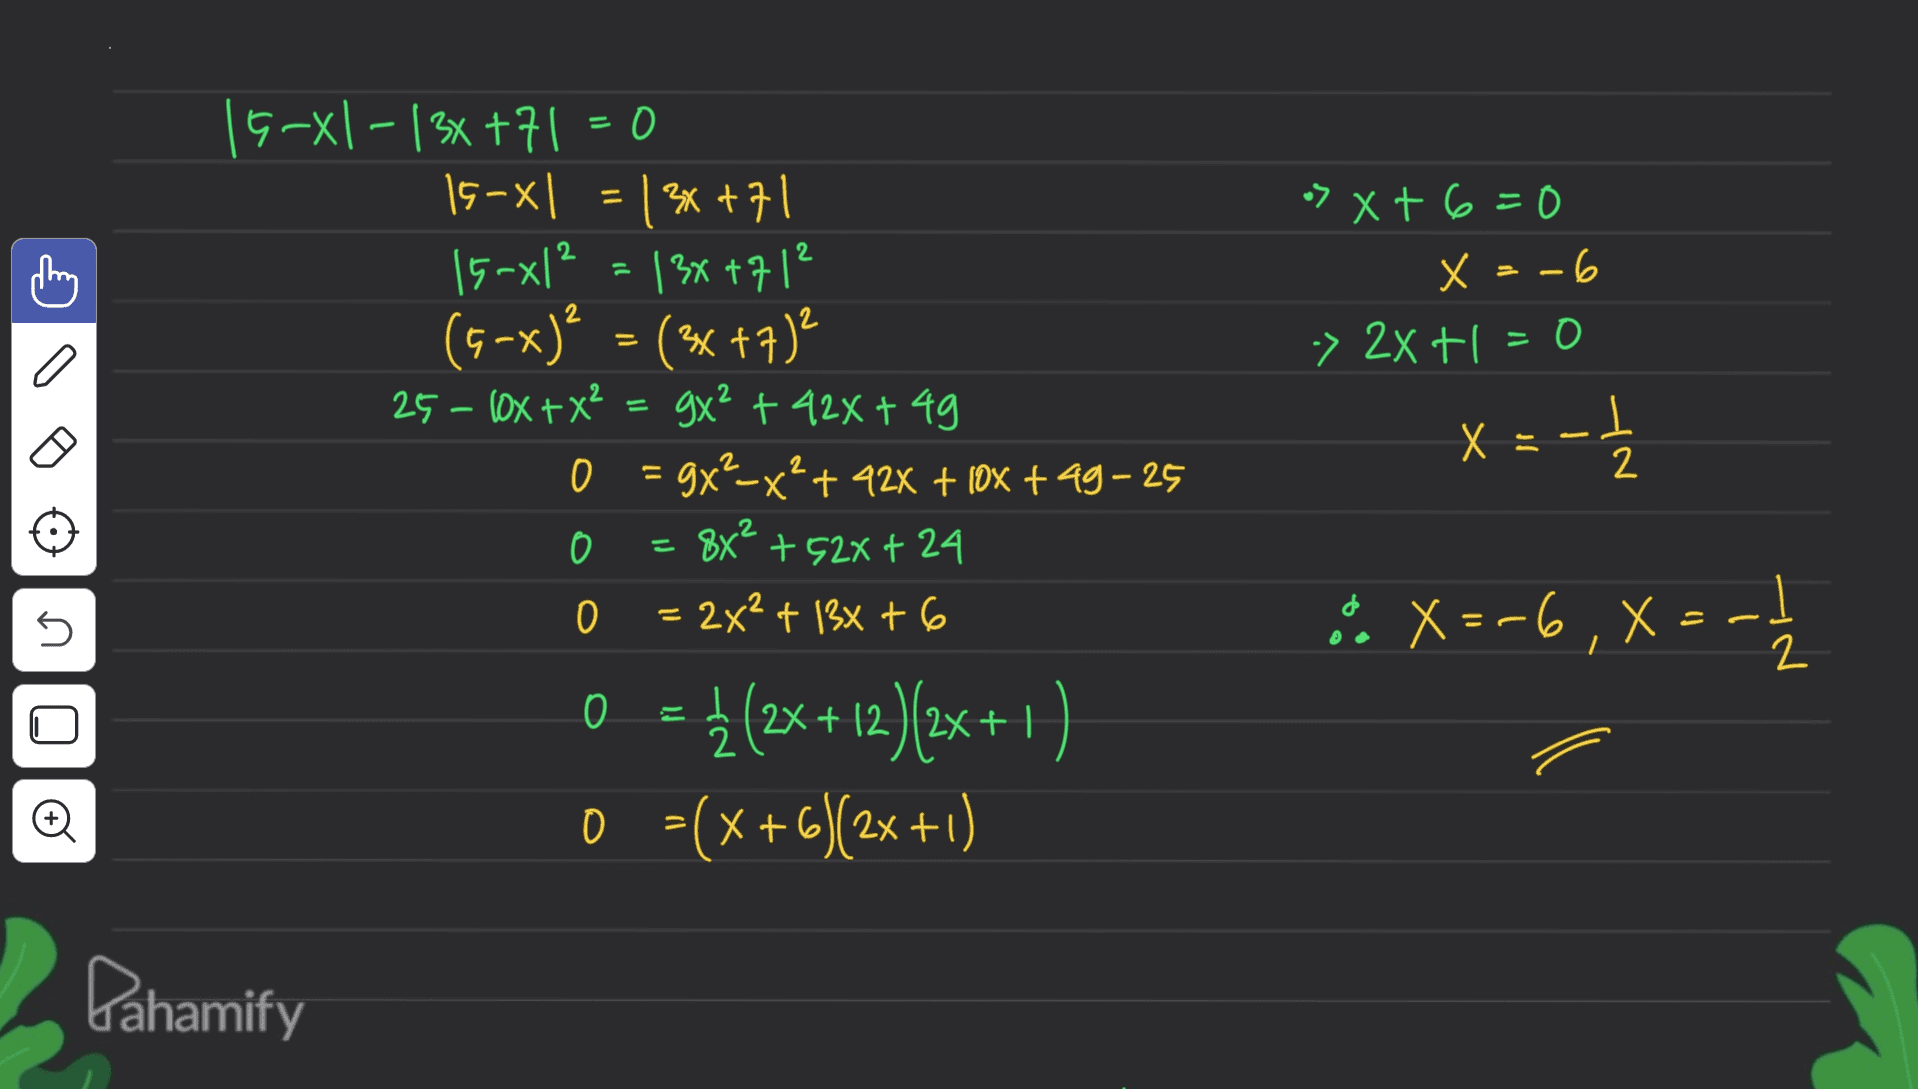 = = 15-xl-13x +71 0 15-x| | 3x +7 1 15-x|= 13x +7 12 (9-x) = (2+7) 25 - 10x + x2 = 9x² + 42%+49 0 gx?-x? + 42X + 10x +49-25 0 88² +528+24 0 = 2x² + 13x + 6 0 = }(2x + 12)(2x+1) 0 =(x+6y2x +1) l > +6=0 x = -6 -> 2x +1 = 0 X = =-1 2 - 5 *. X=-6, X = -1/ Dahamify 